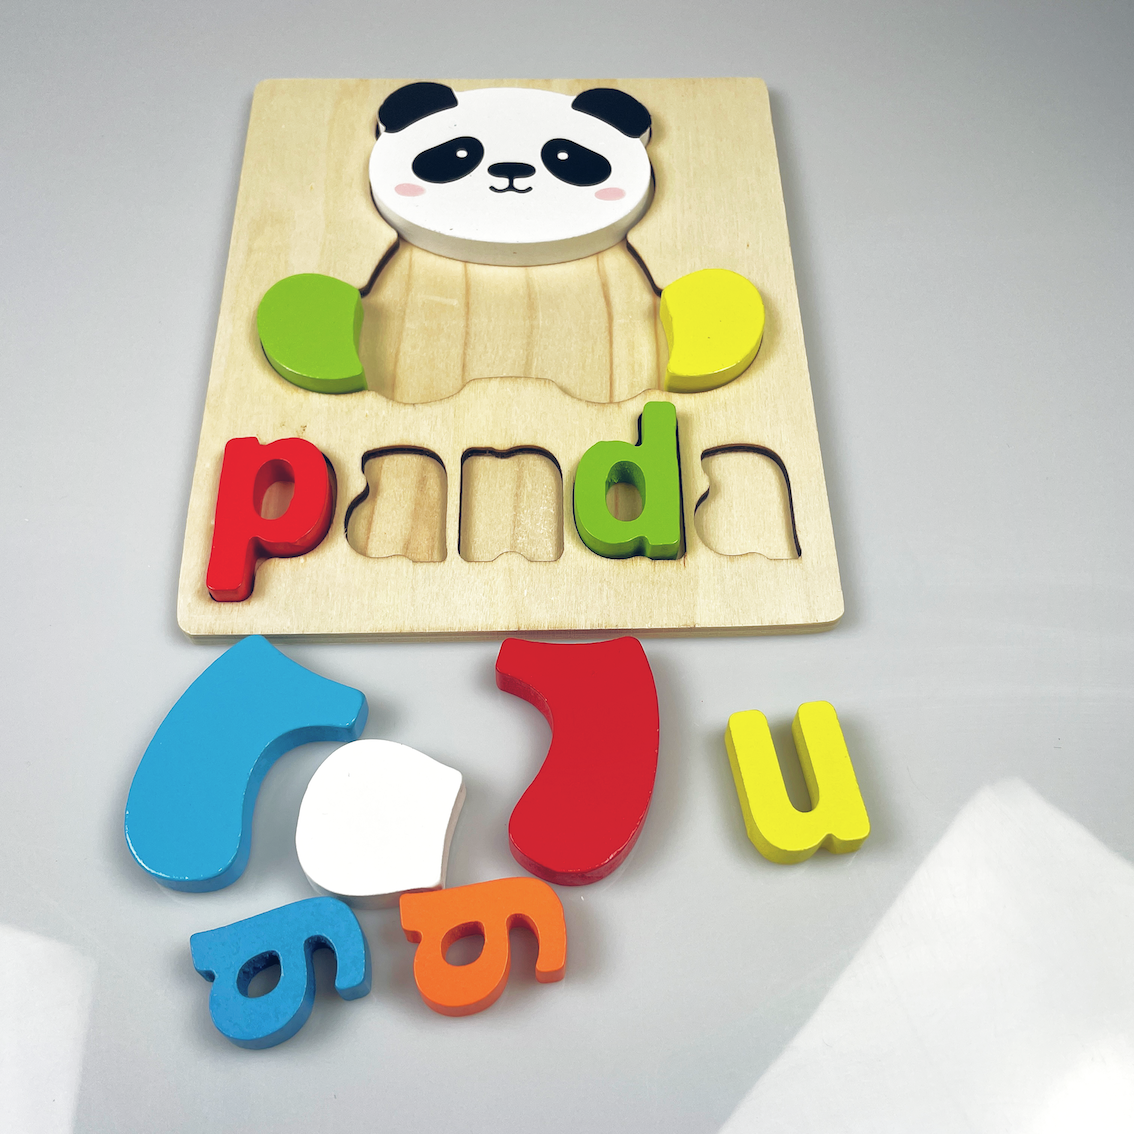 Panda - skladanie